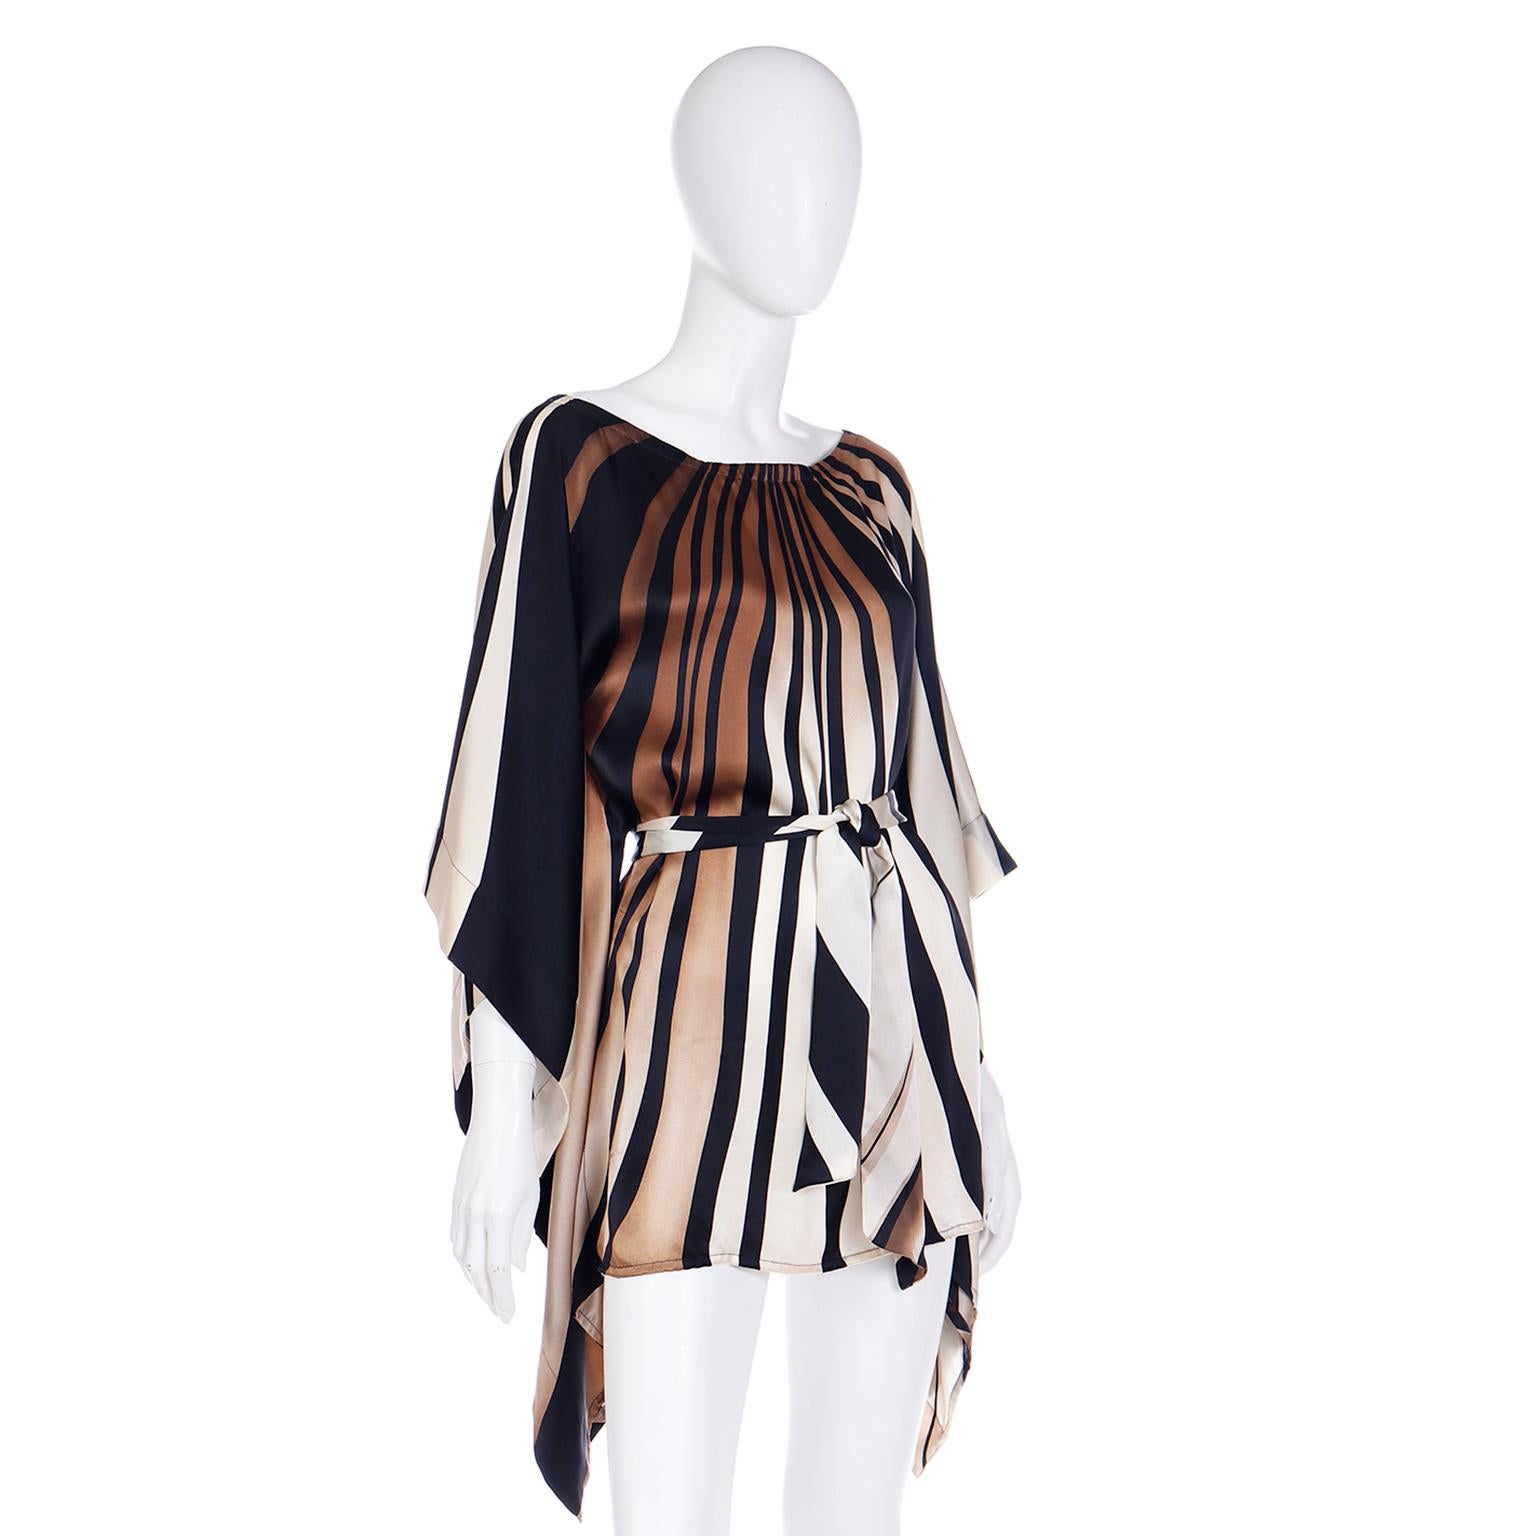 Vintage Silk Caftan Style Stripe Top in Black Brown & Ivory w Sash Belt For Sale 2